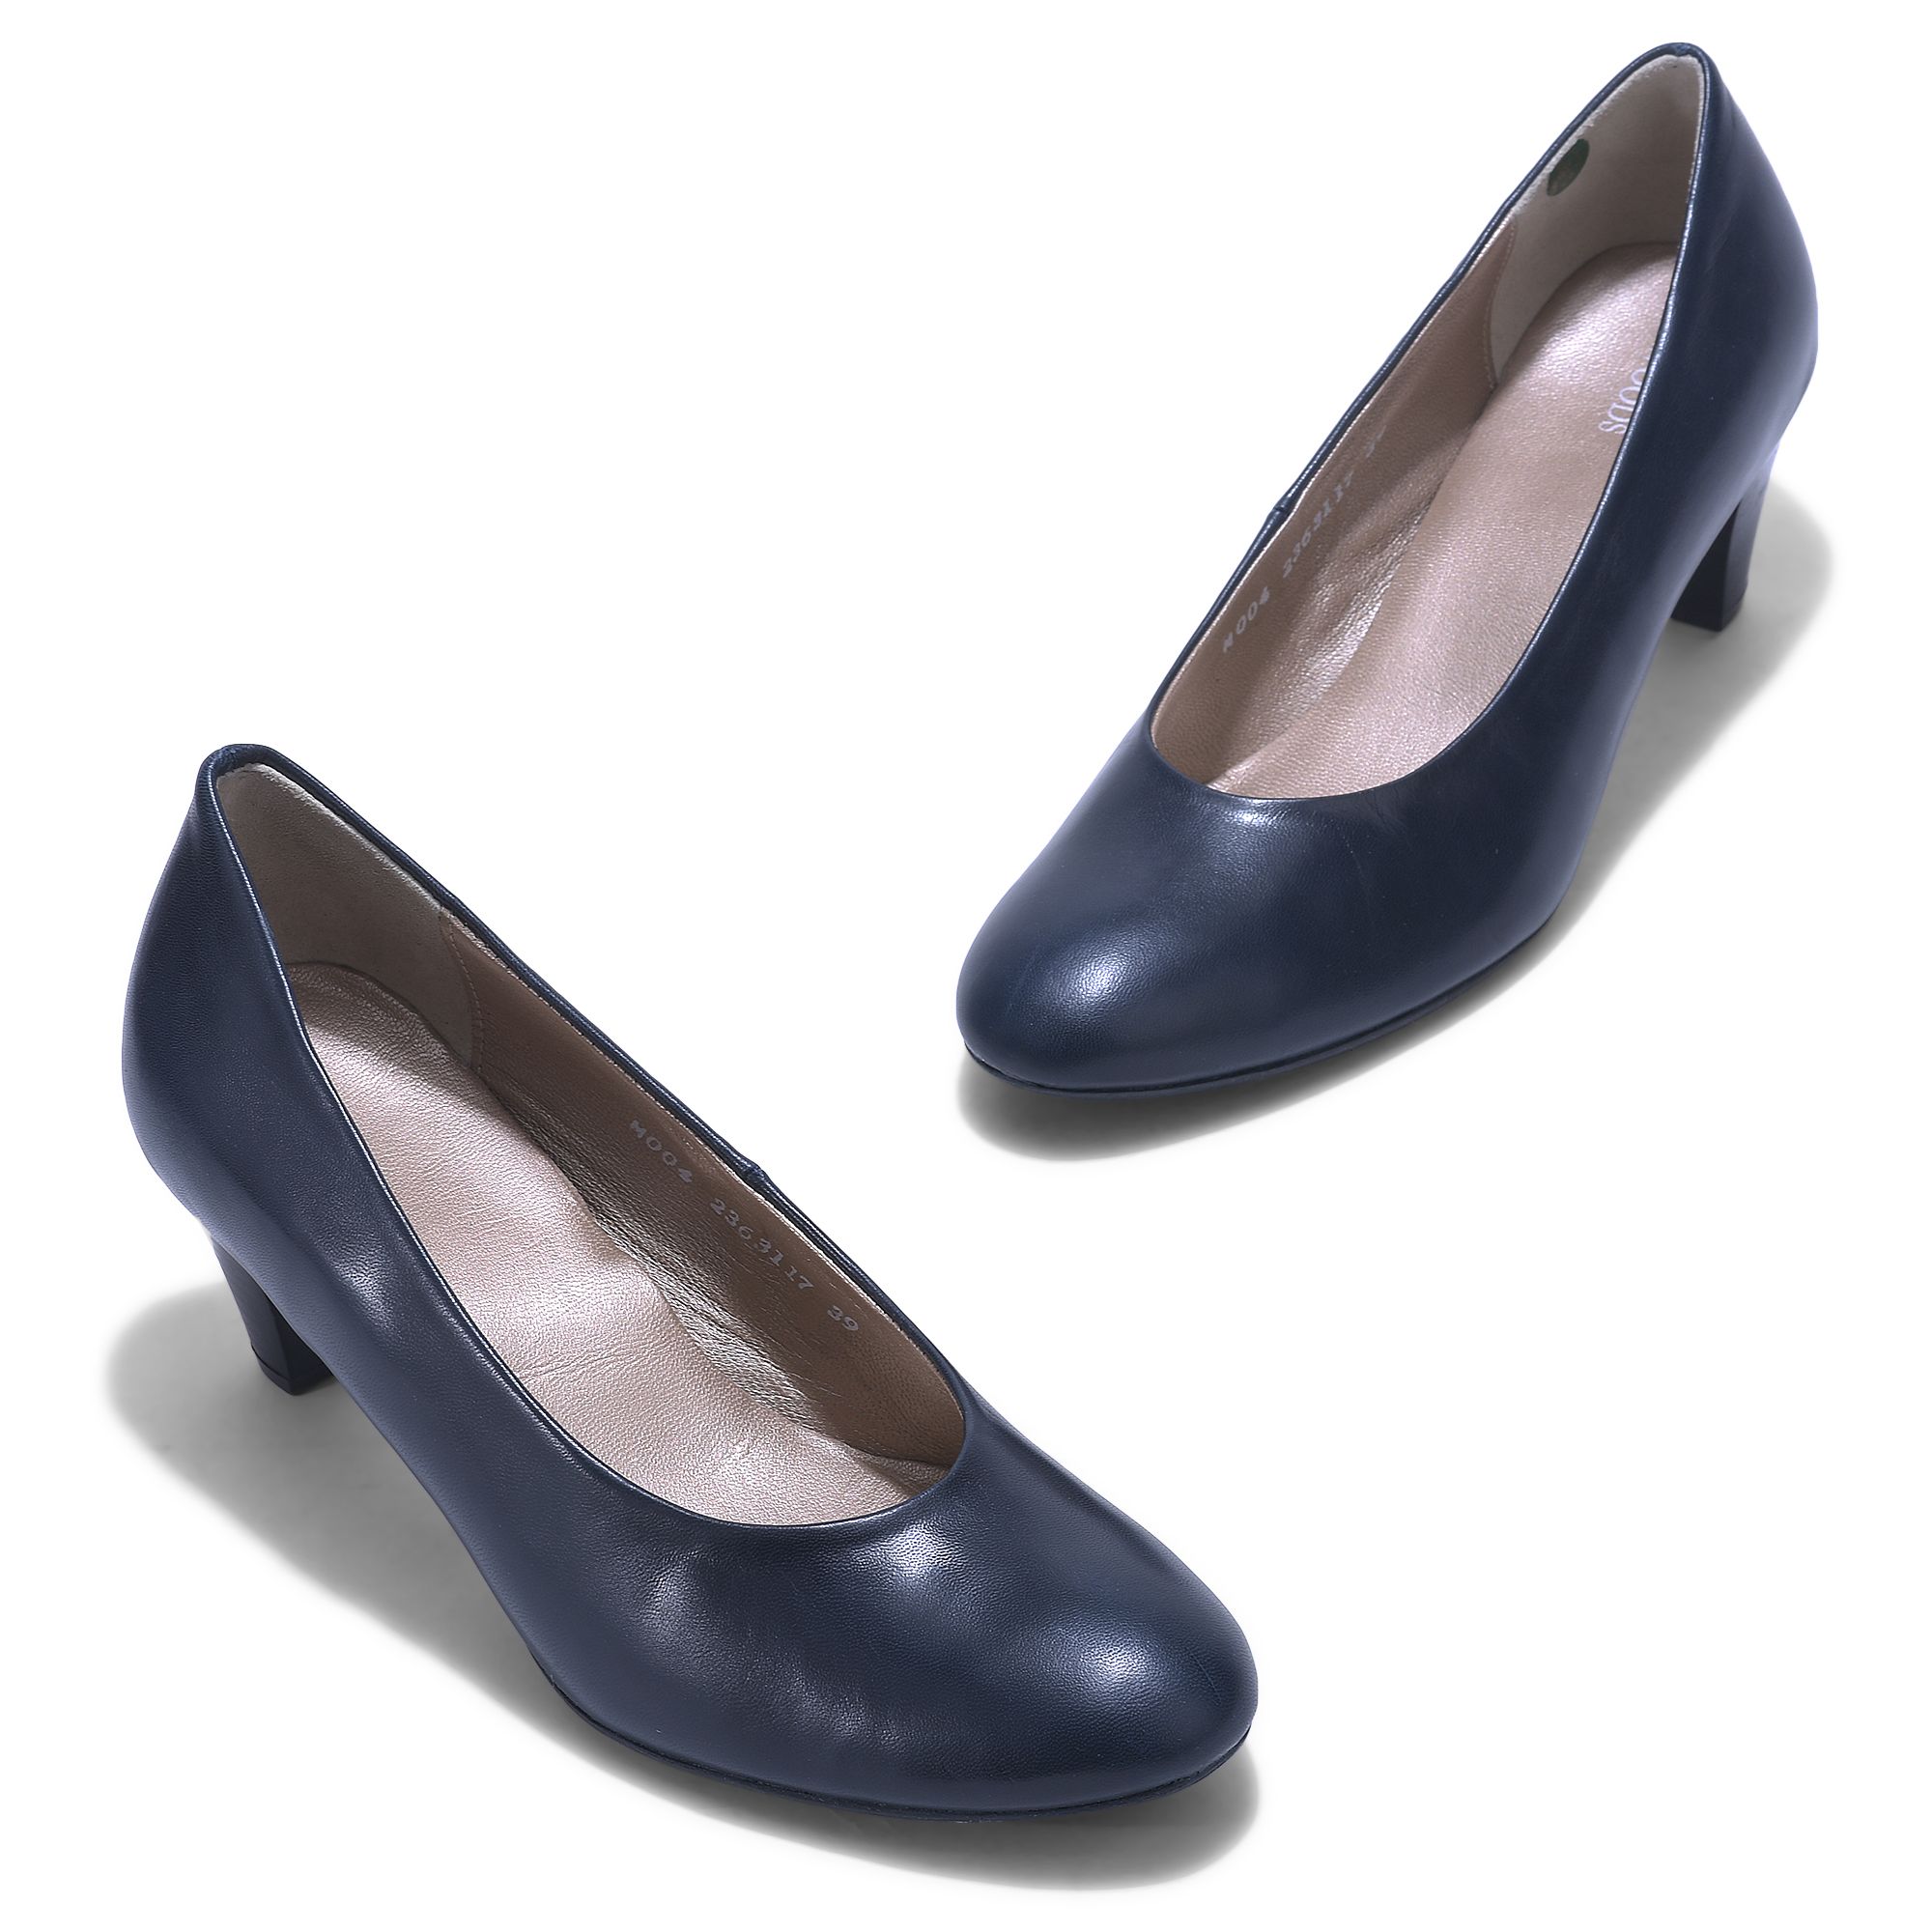 BLUE high heel shoes for women